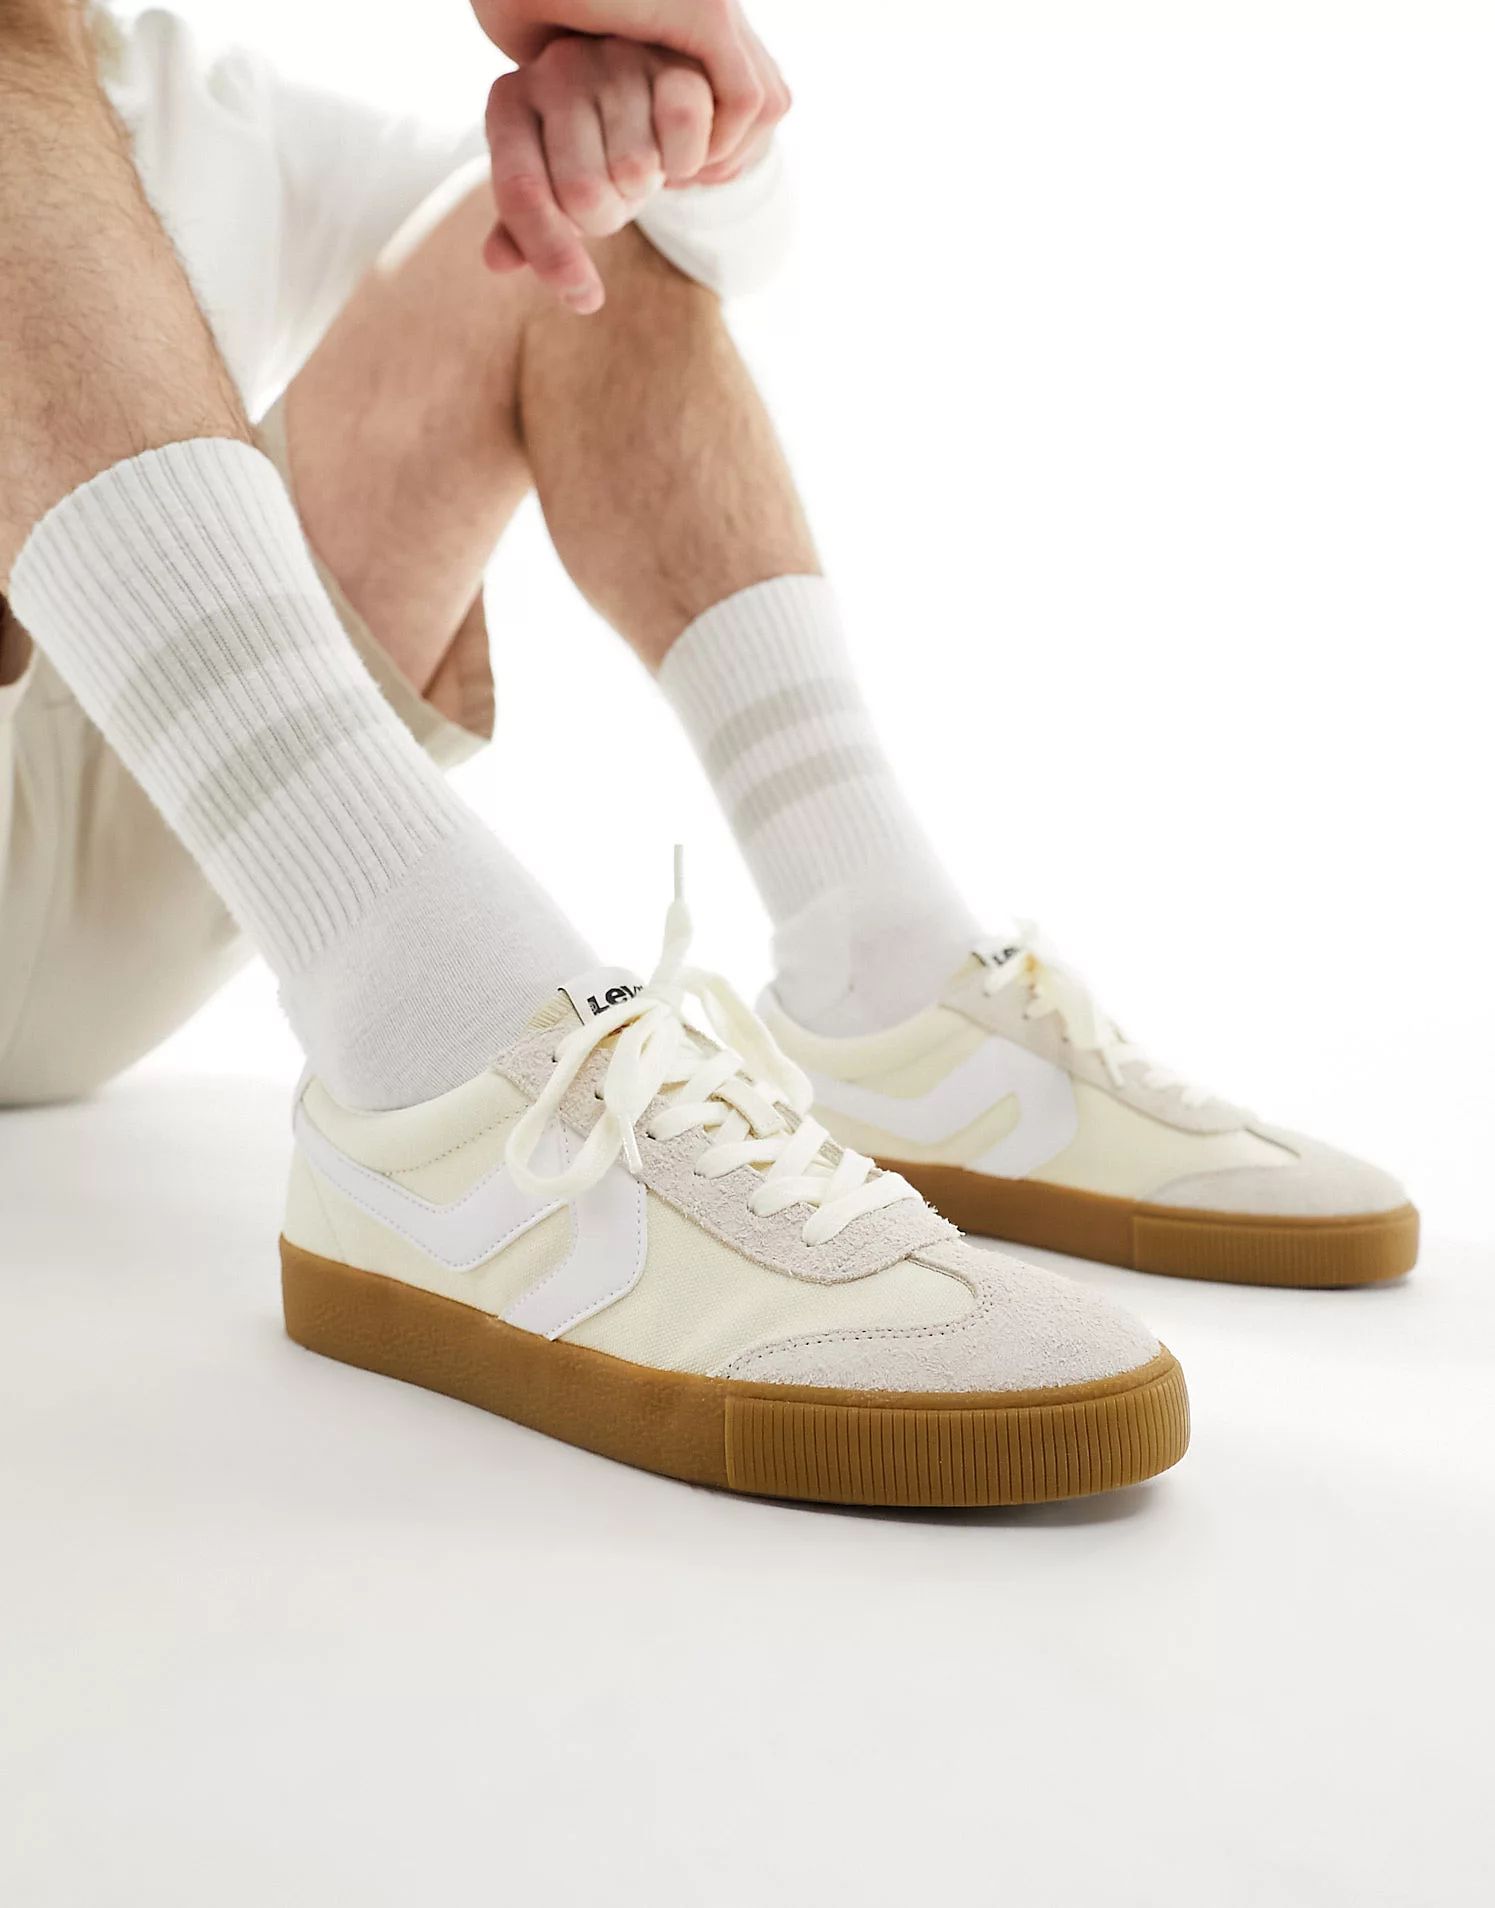 Levi's Sneak trainer  in cream suede mix with gum sole | ASOS (Global)